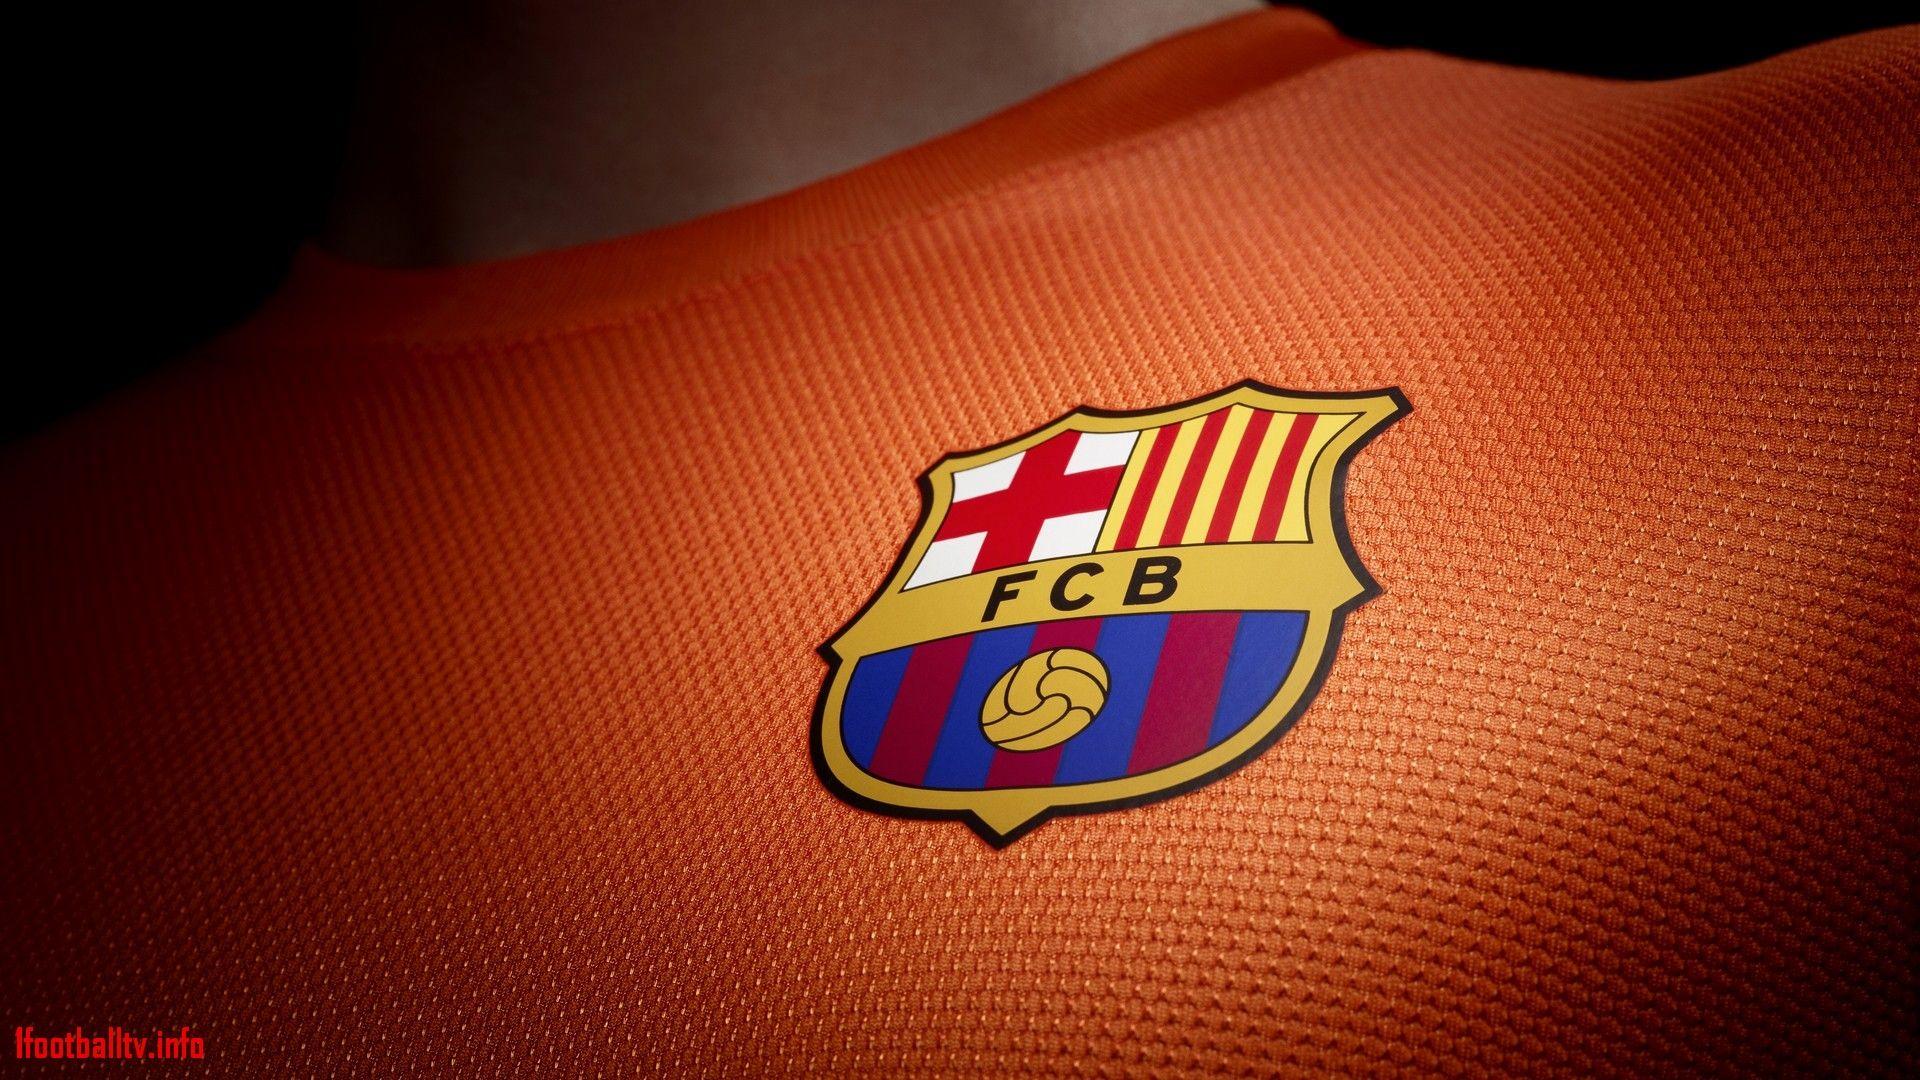 Awesome Fc Barcelona Logo iPhone Wallpaper HD Football HD